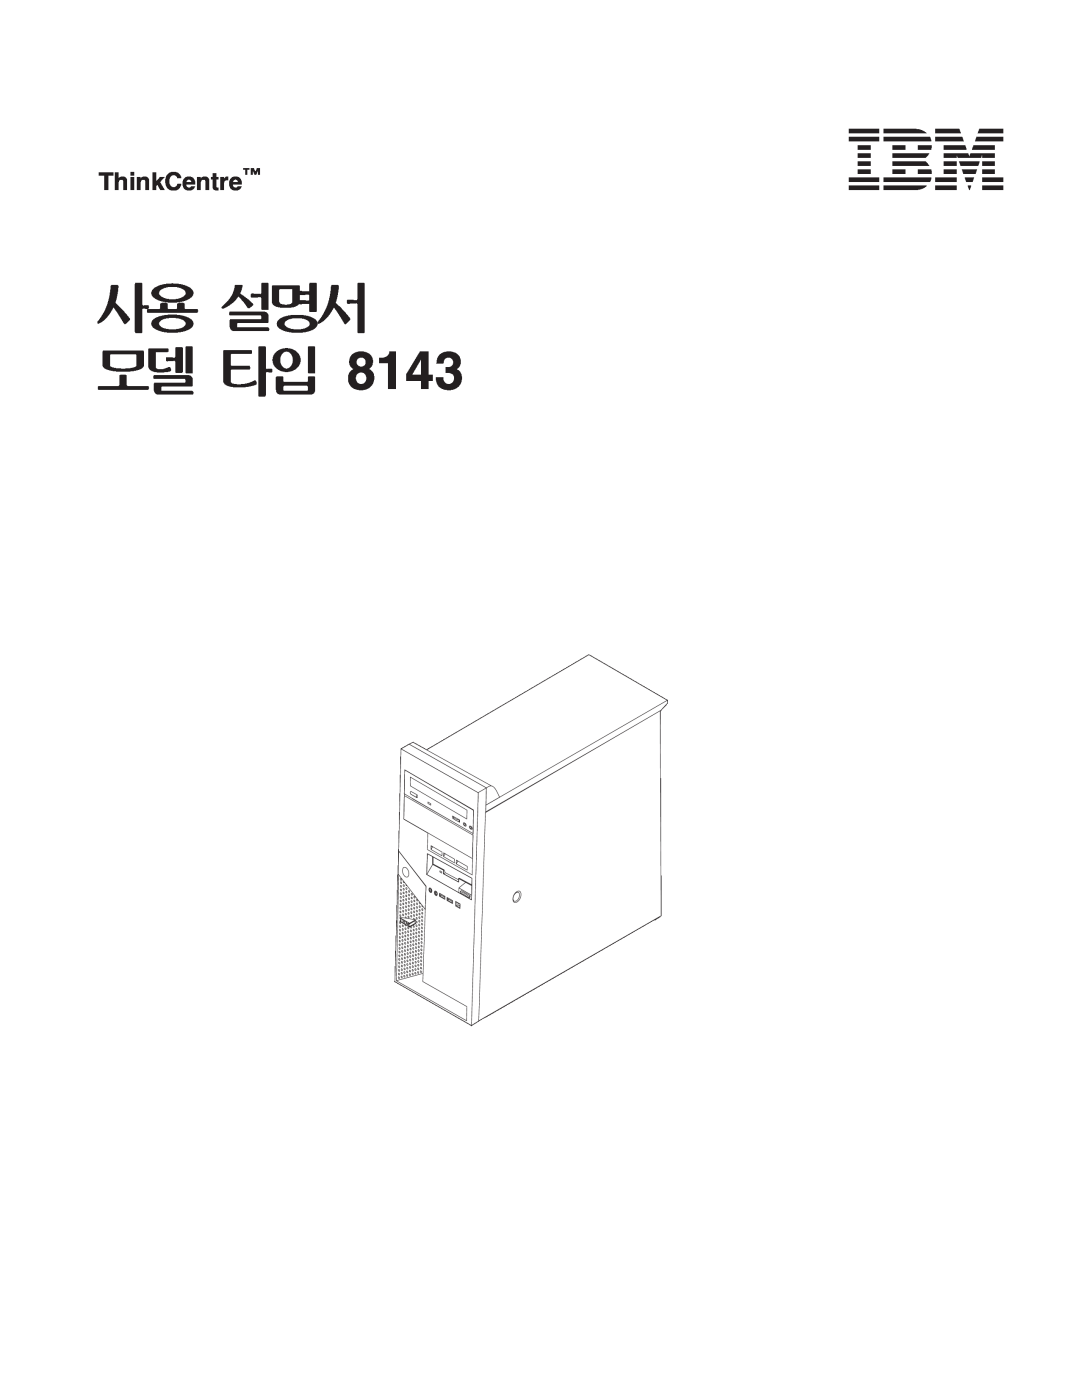 IBM 8143 manual ThinkCentre 